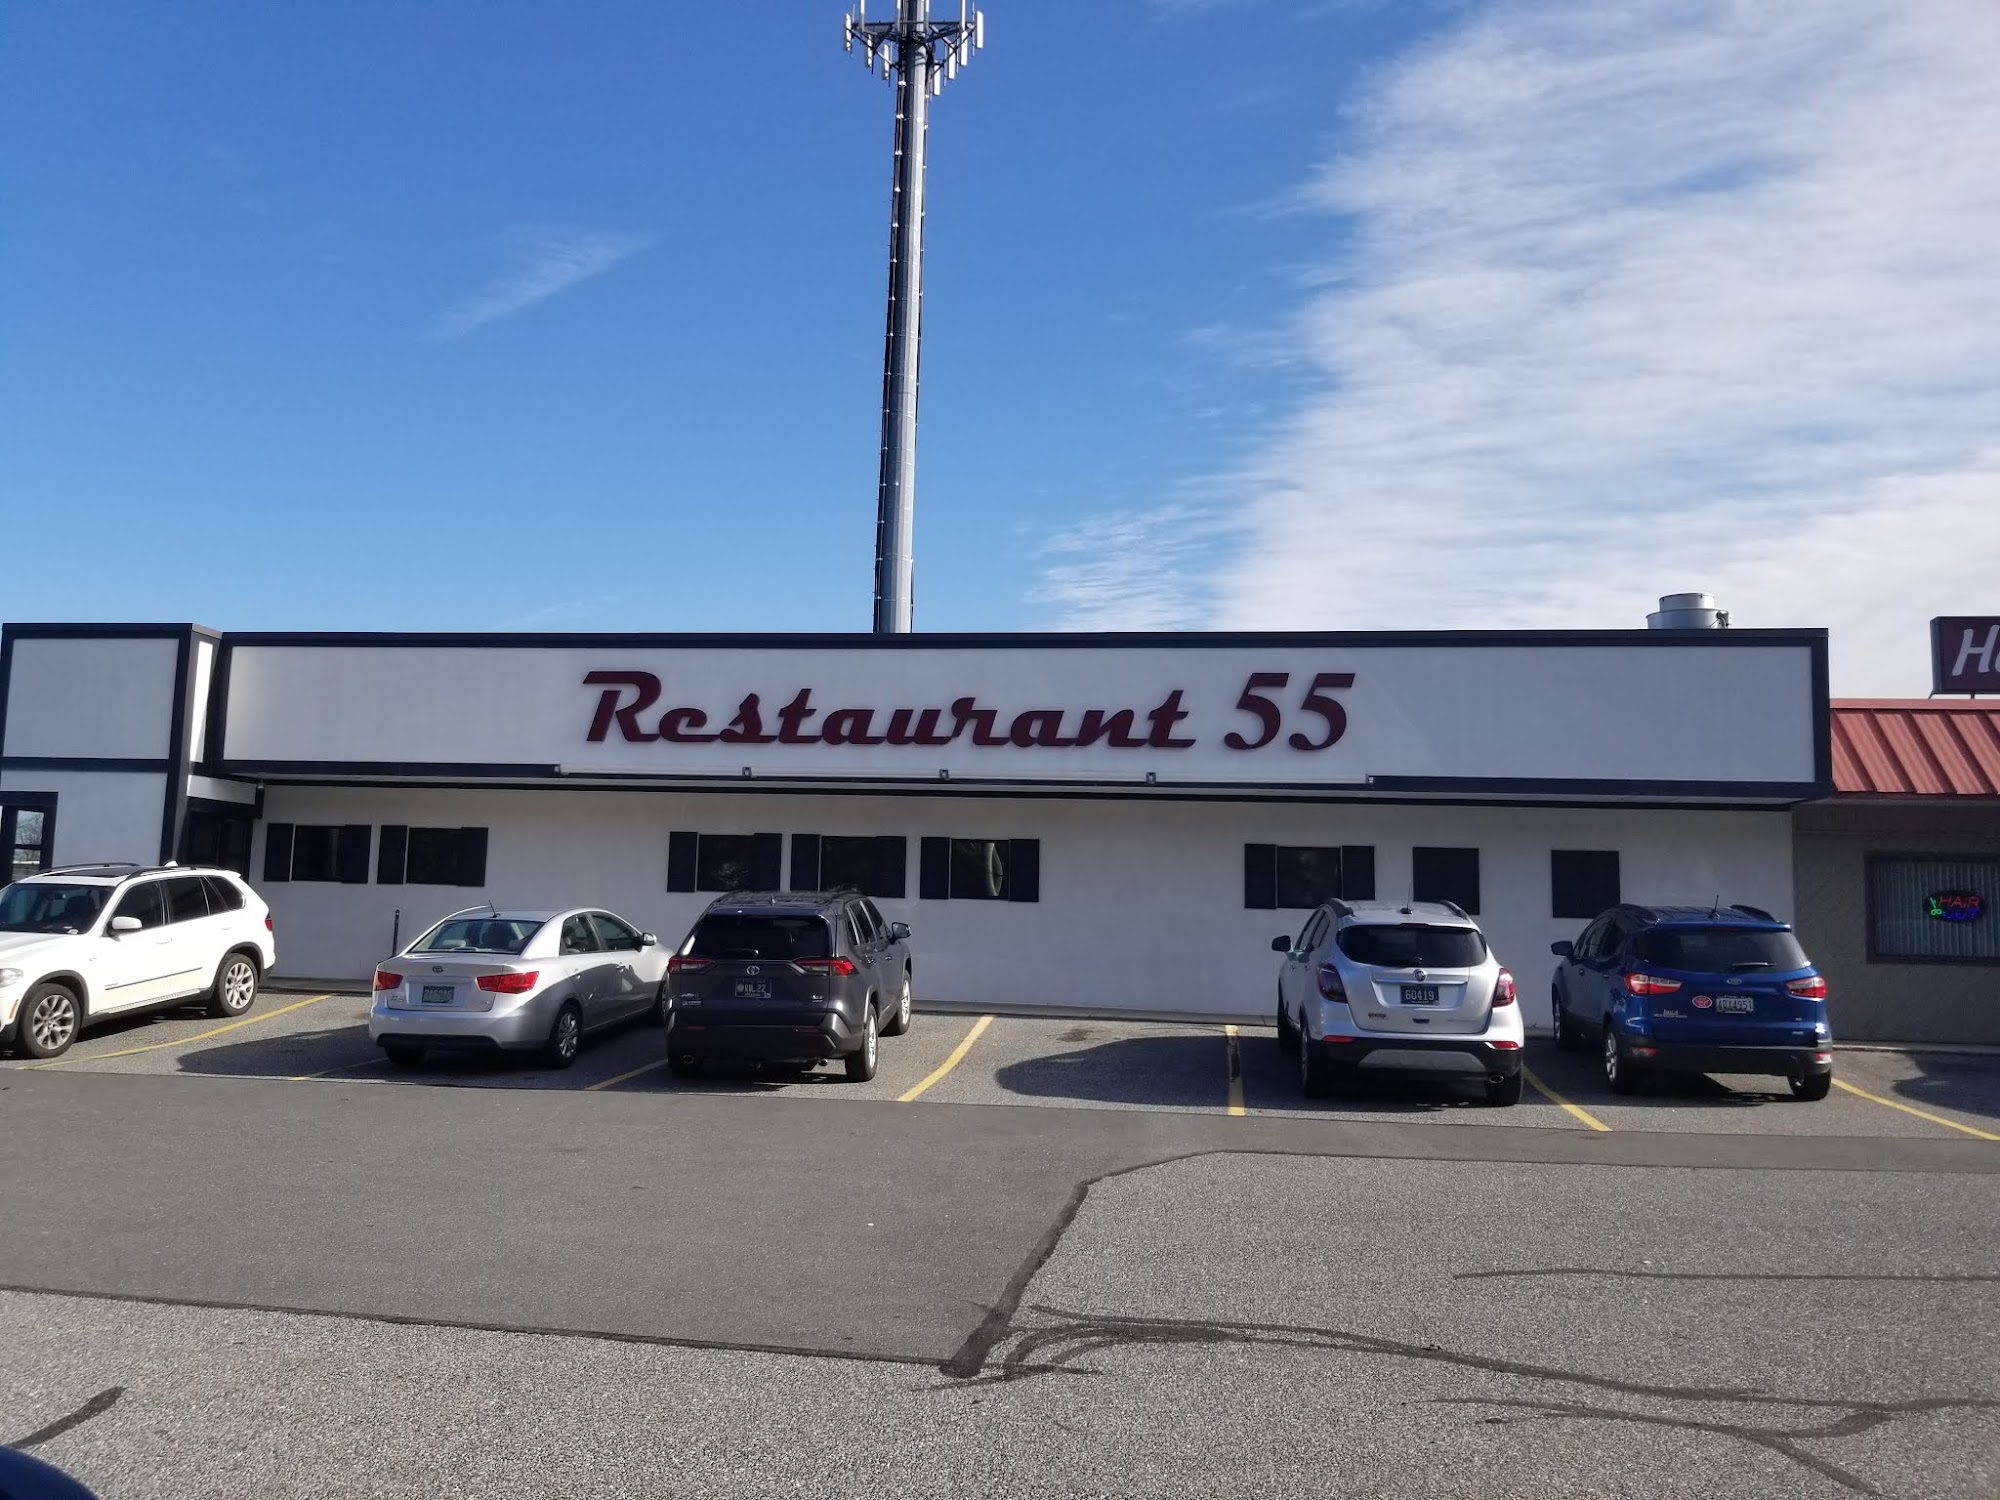 Restaurant 55